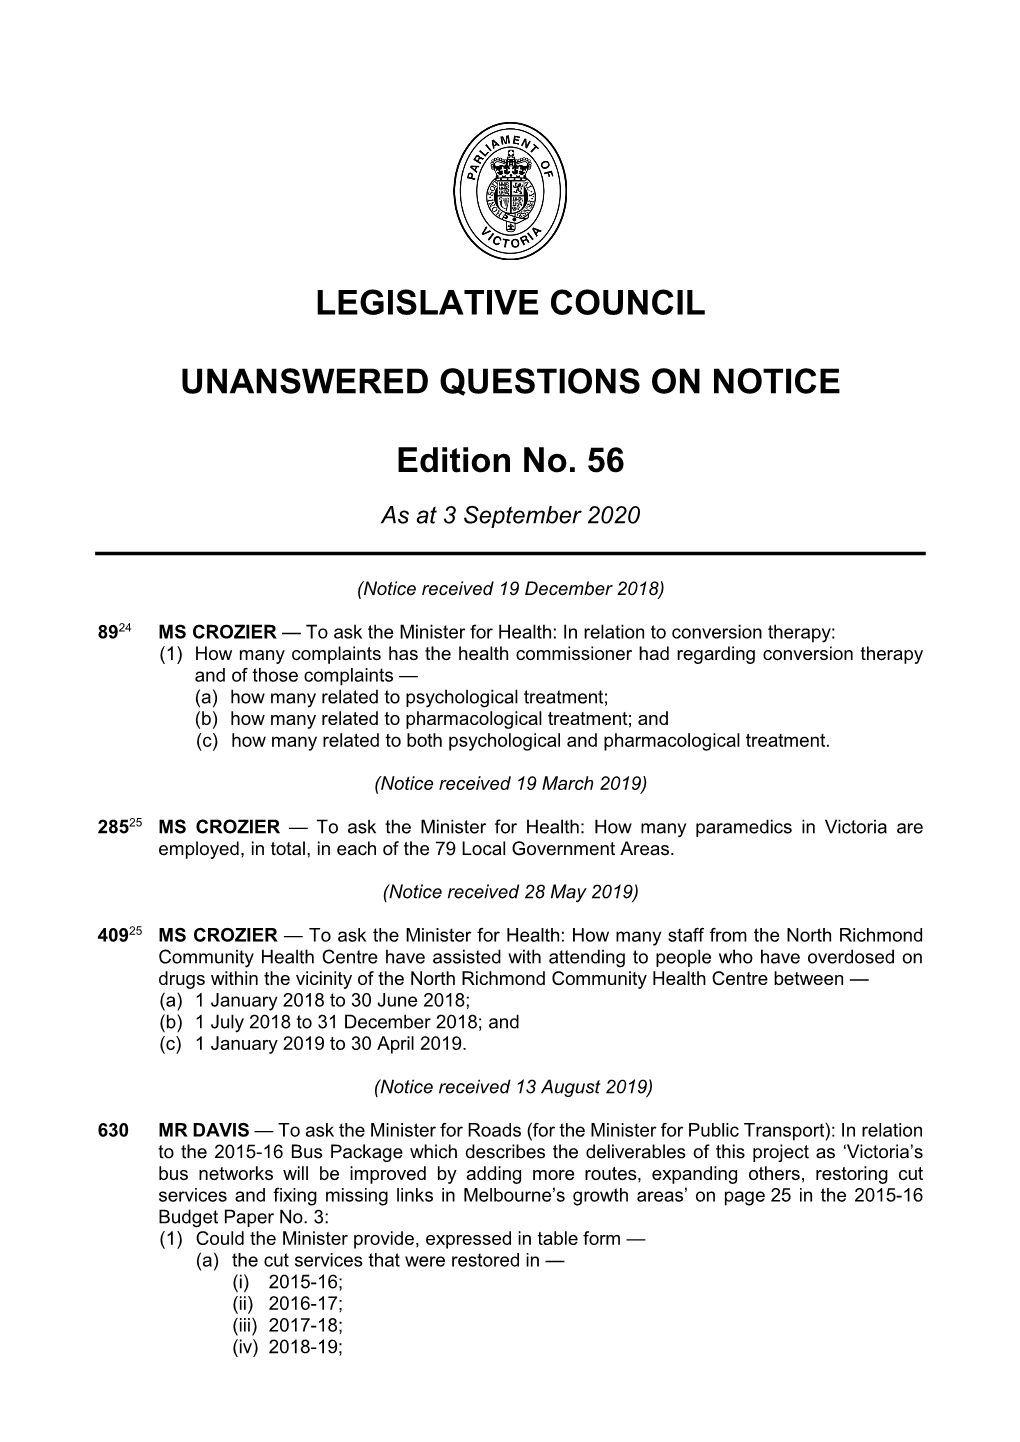 Legislative Council Unanswered Questions On